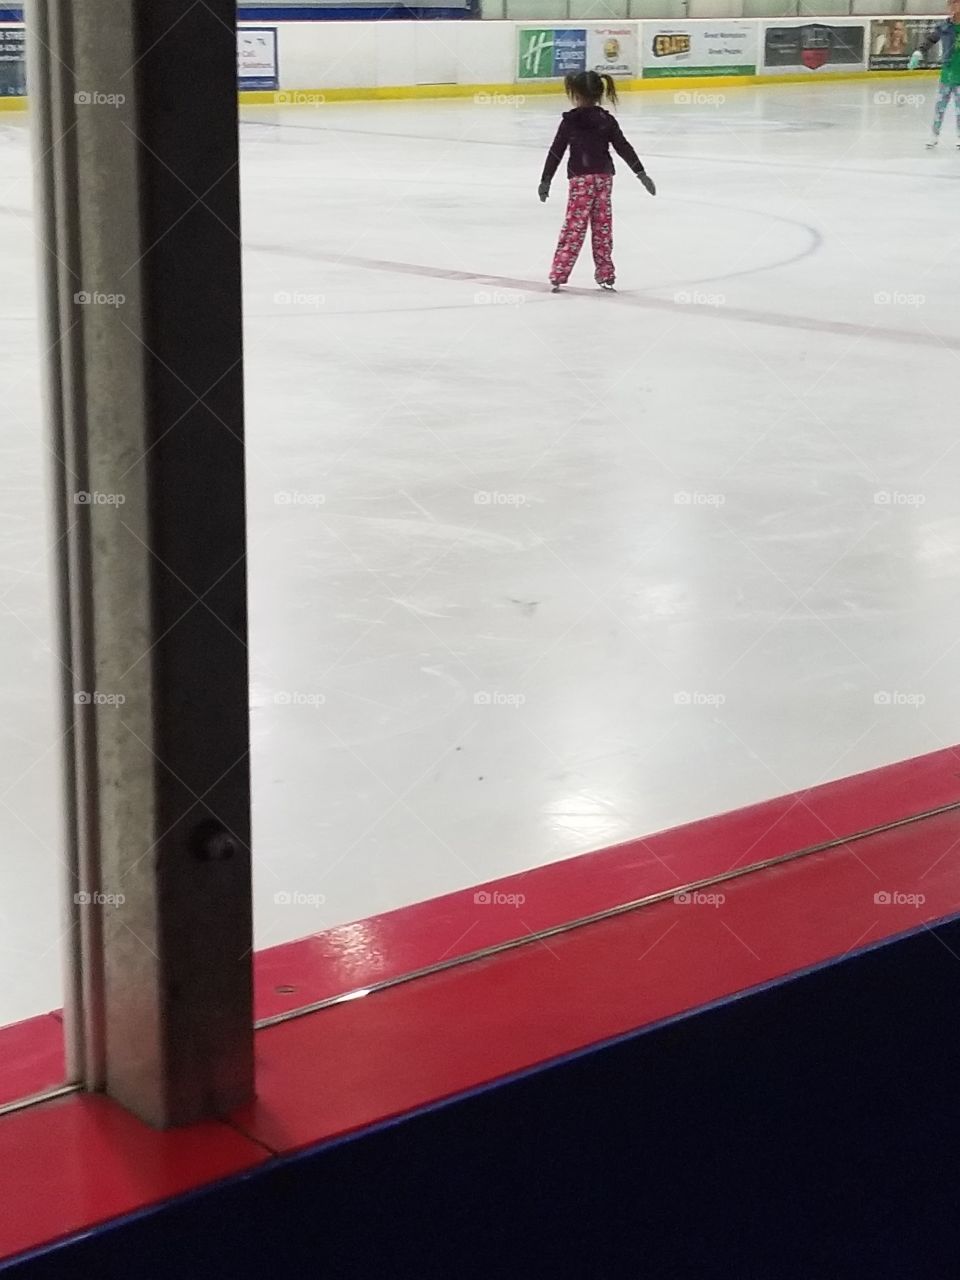 small child ice skating